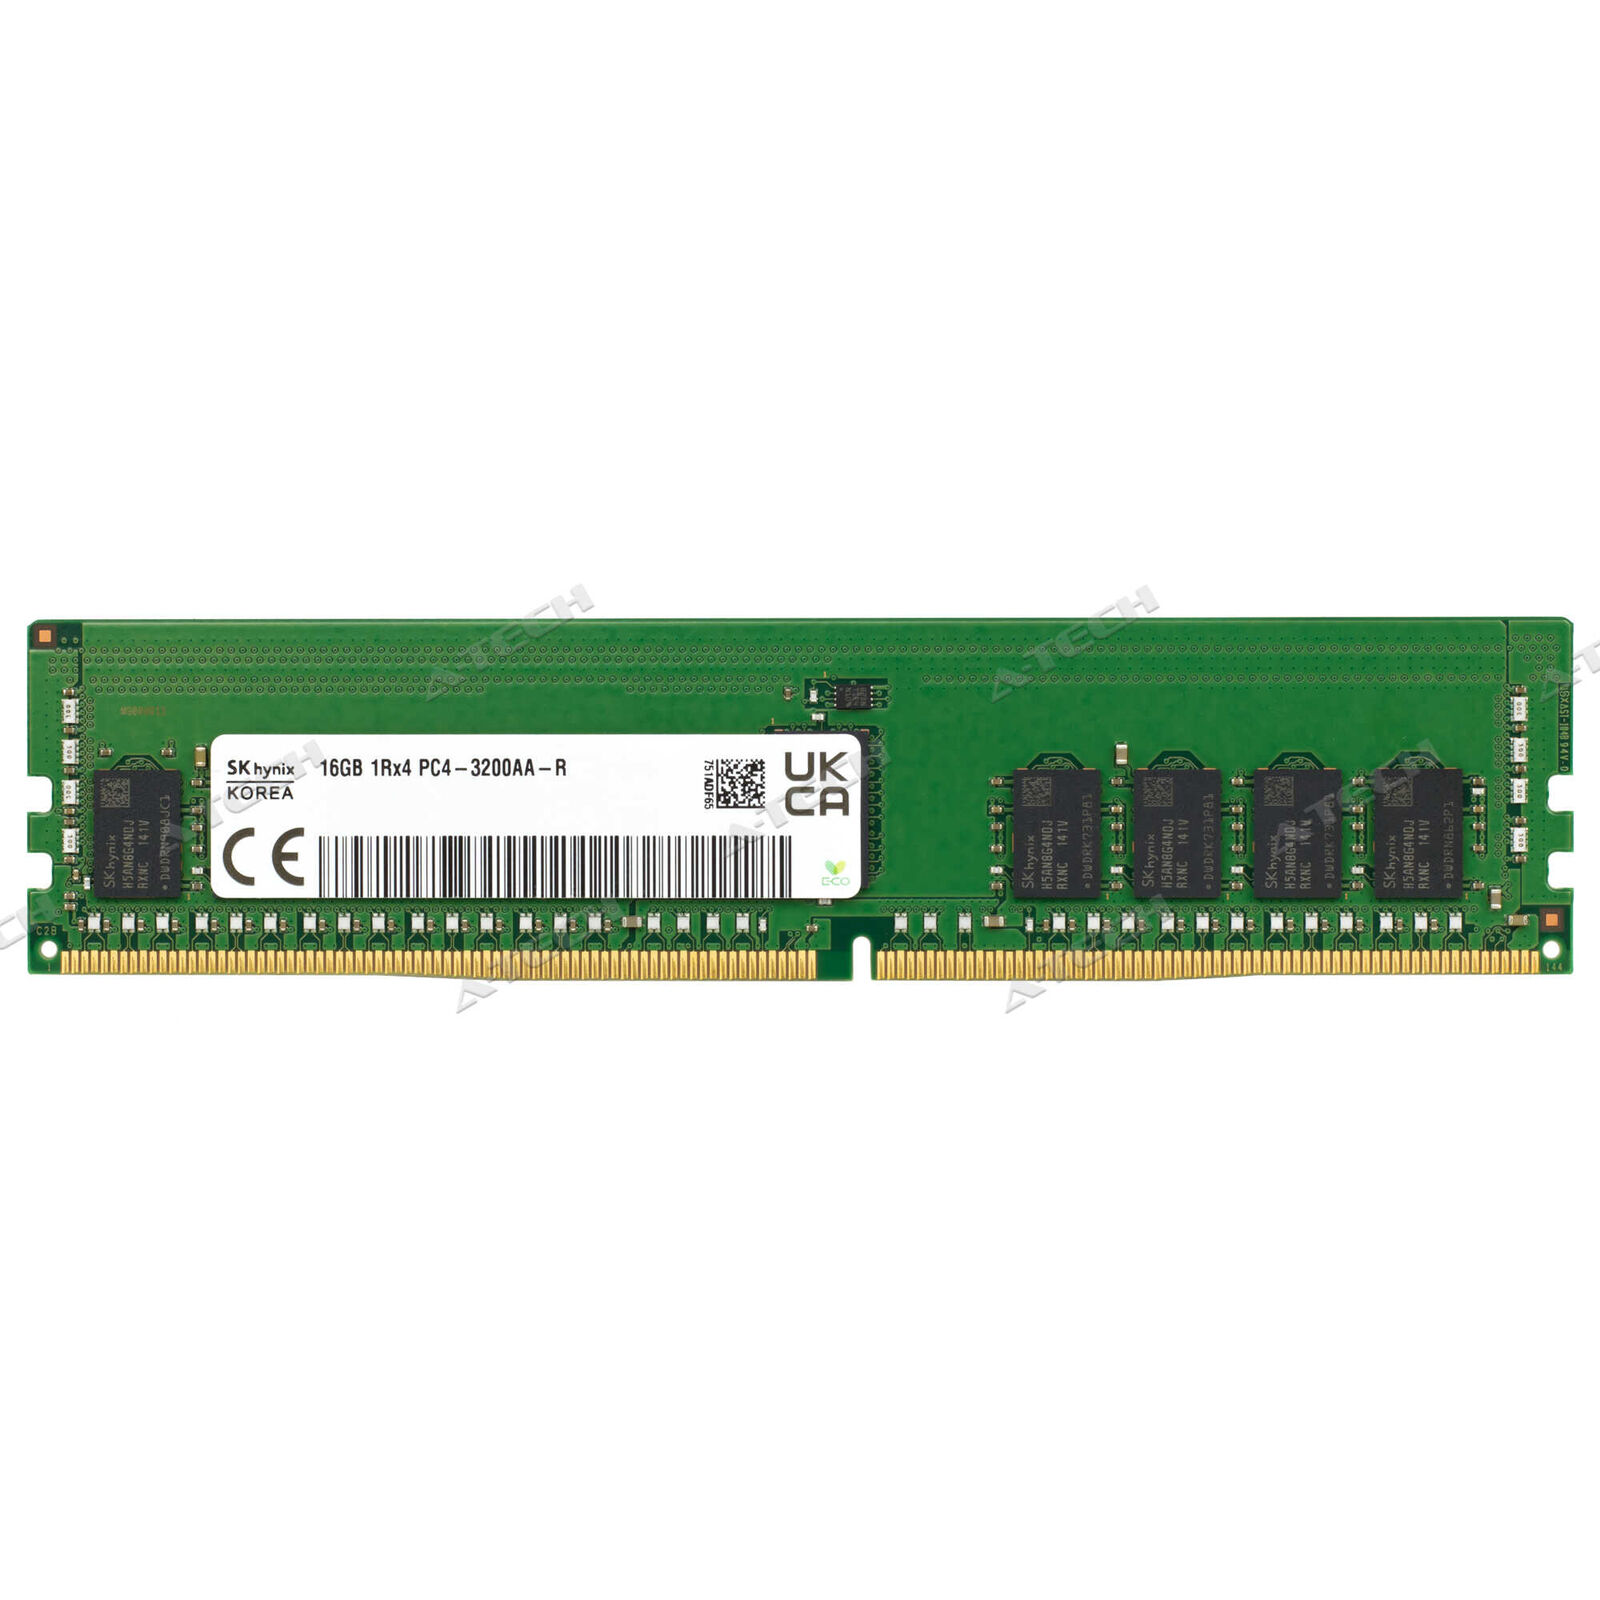 Hynix 16GB 1Rx4 PC4-3200 RDIMM DDR4-25600 ECC REG Registered Server Memory RAM